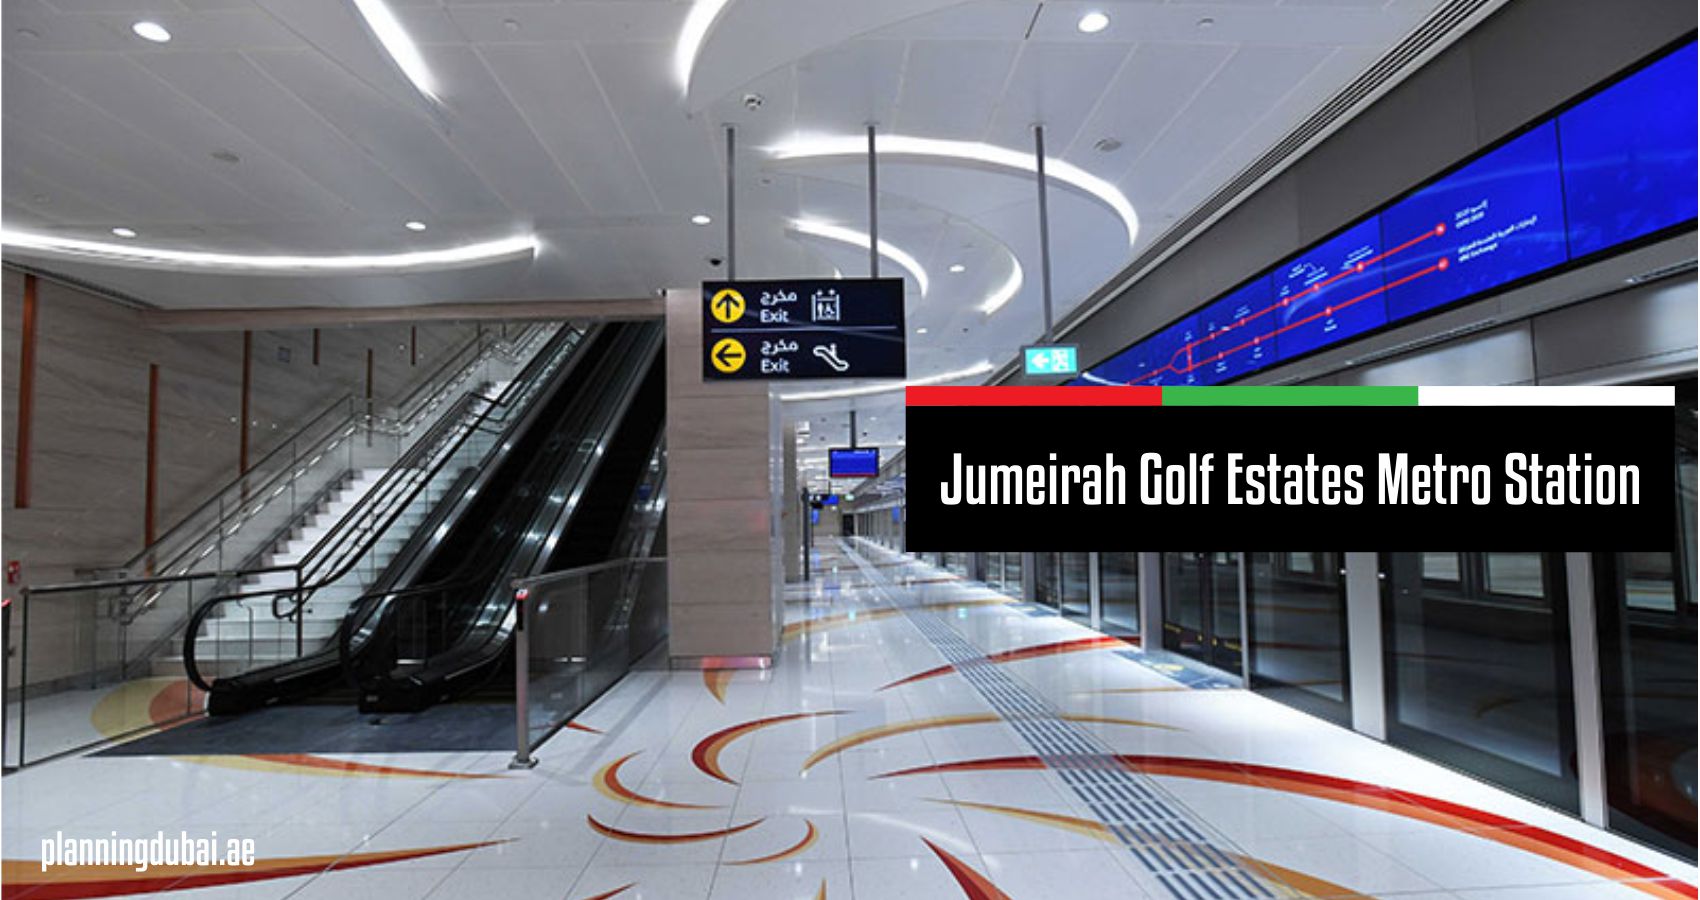 Jumeirah Golf Estates Metro Station